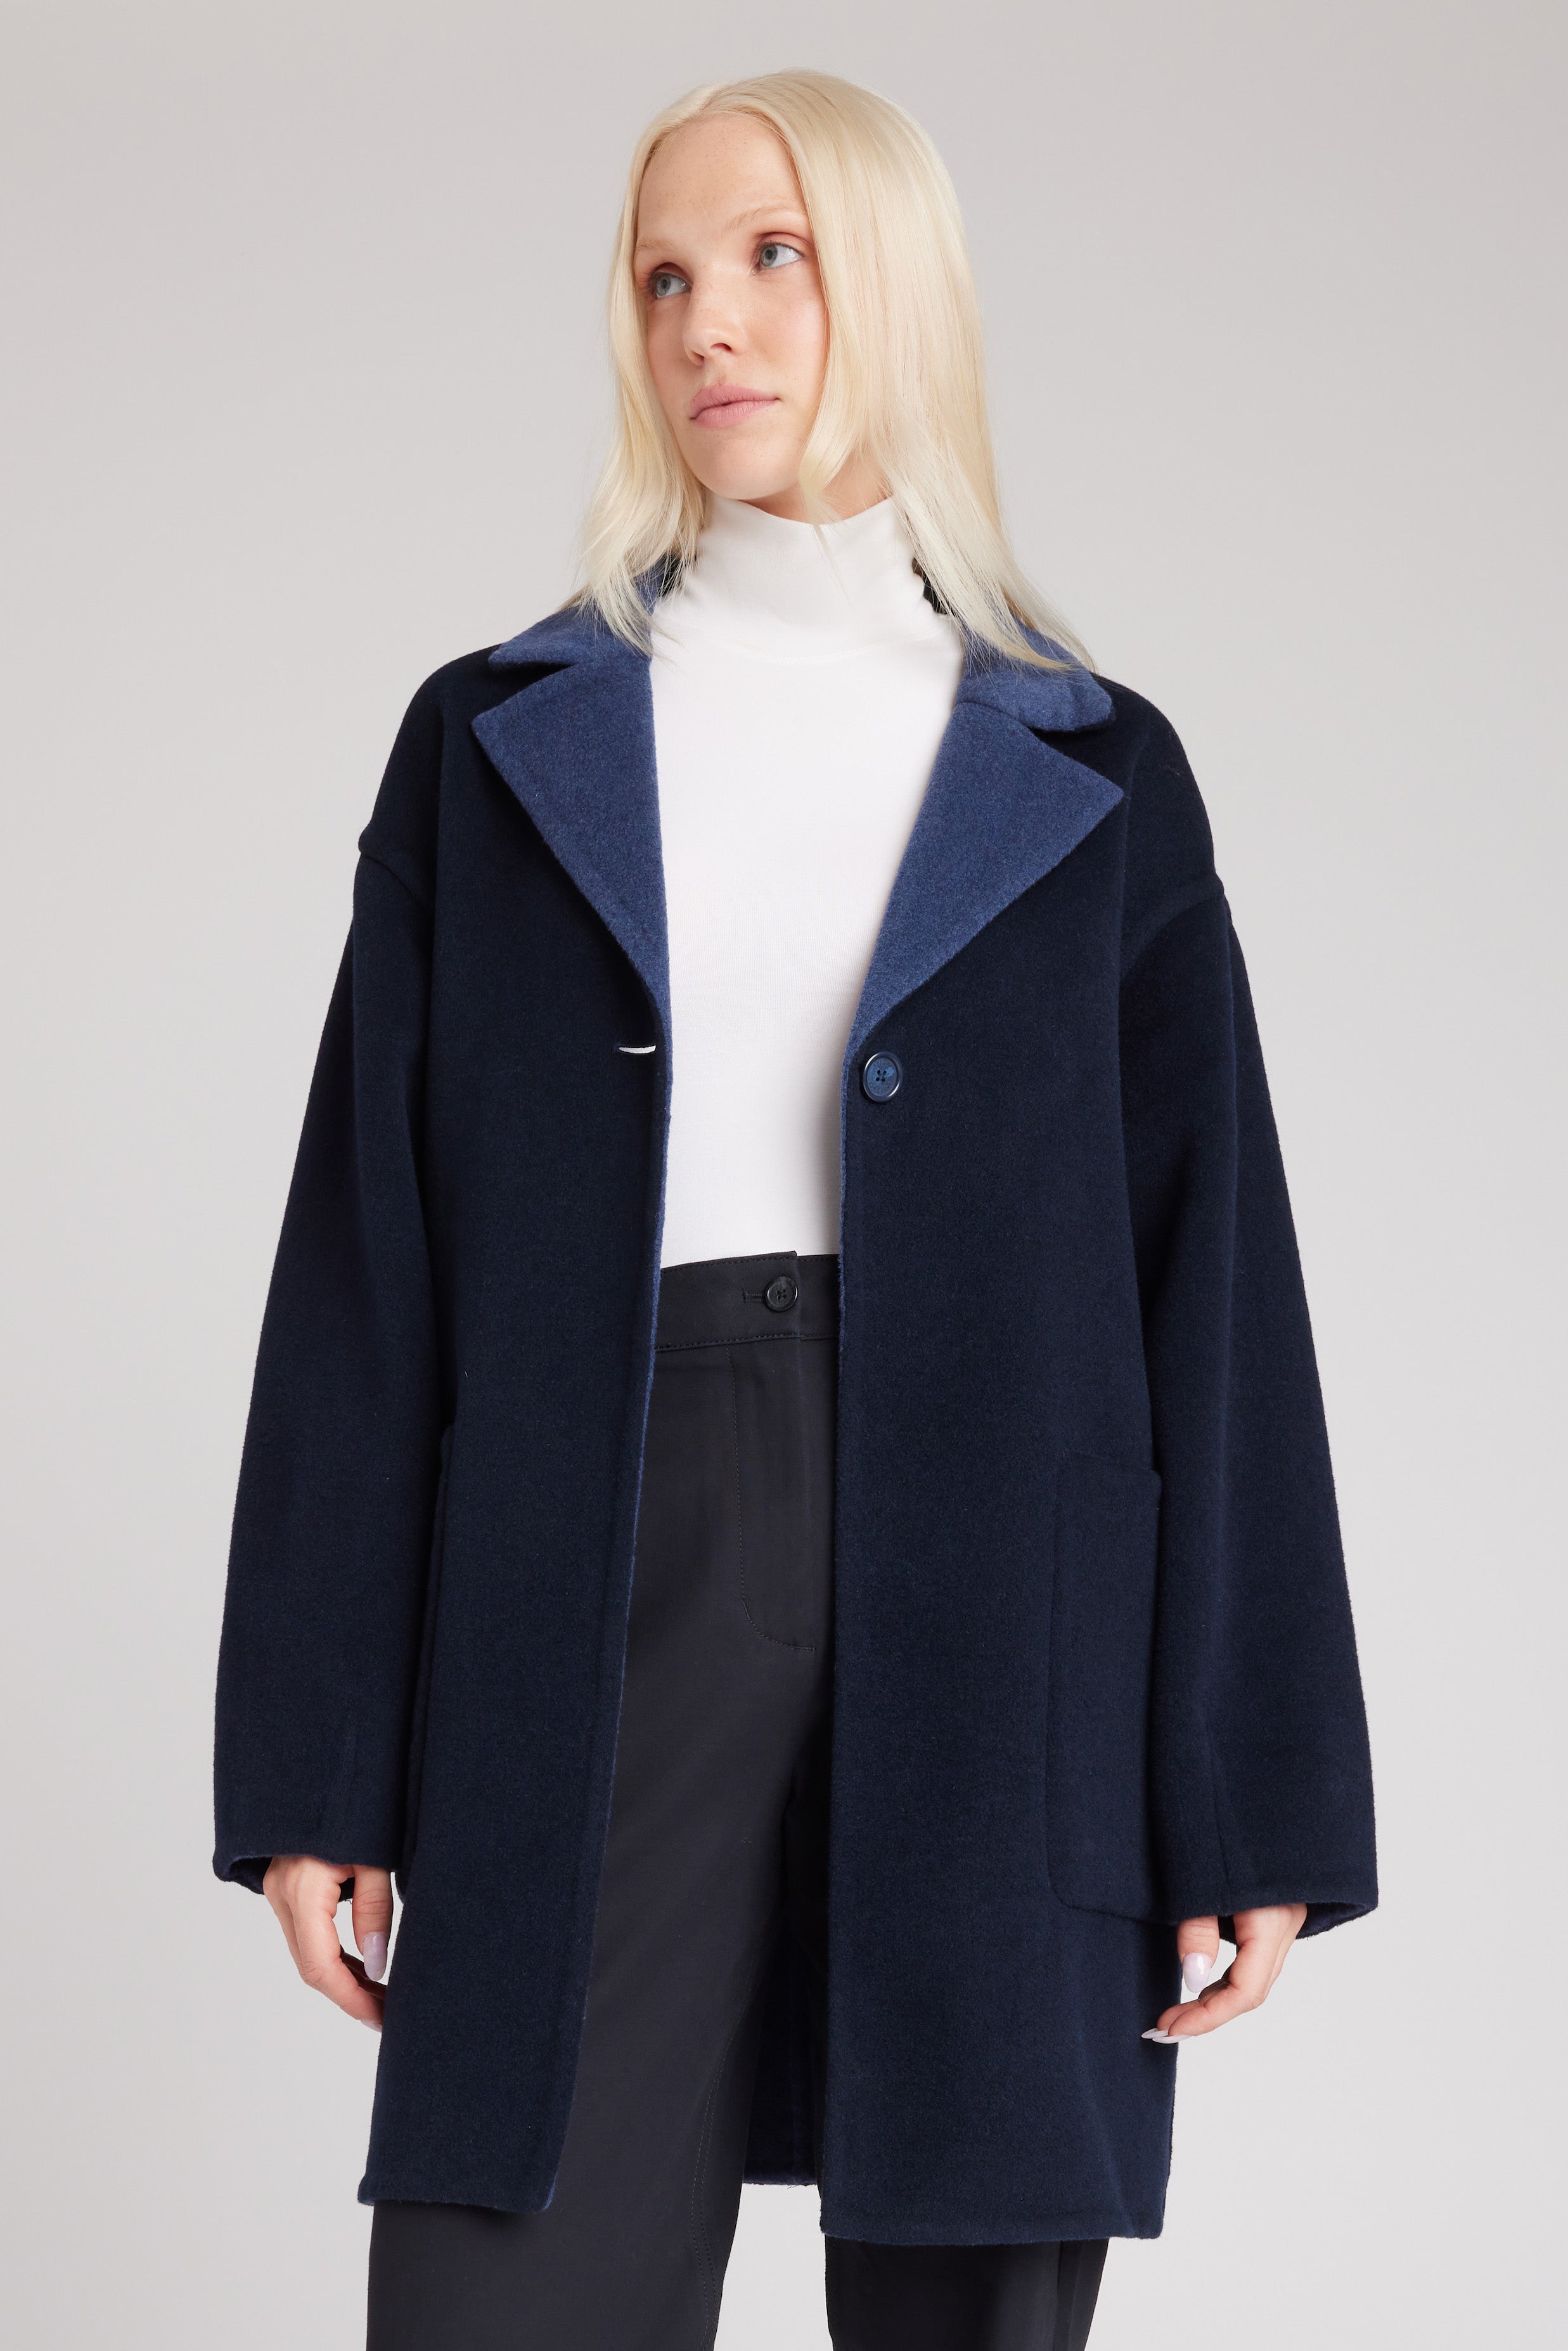 Kit and Ace — Joy Double Wool Coat